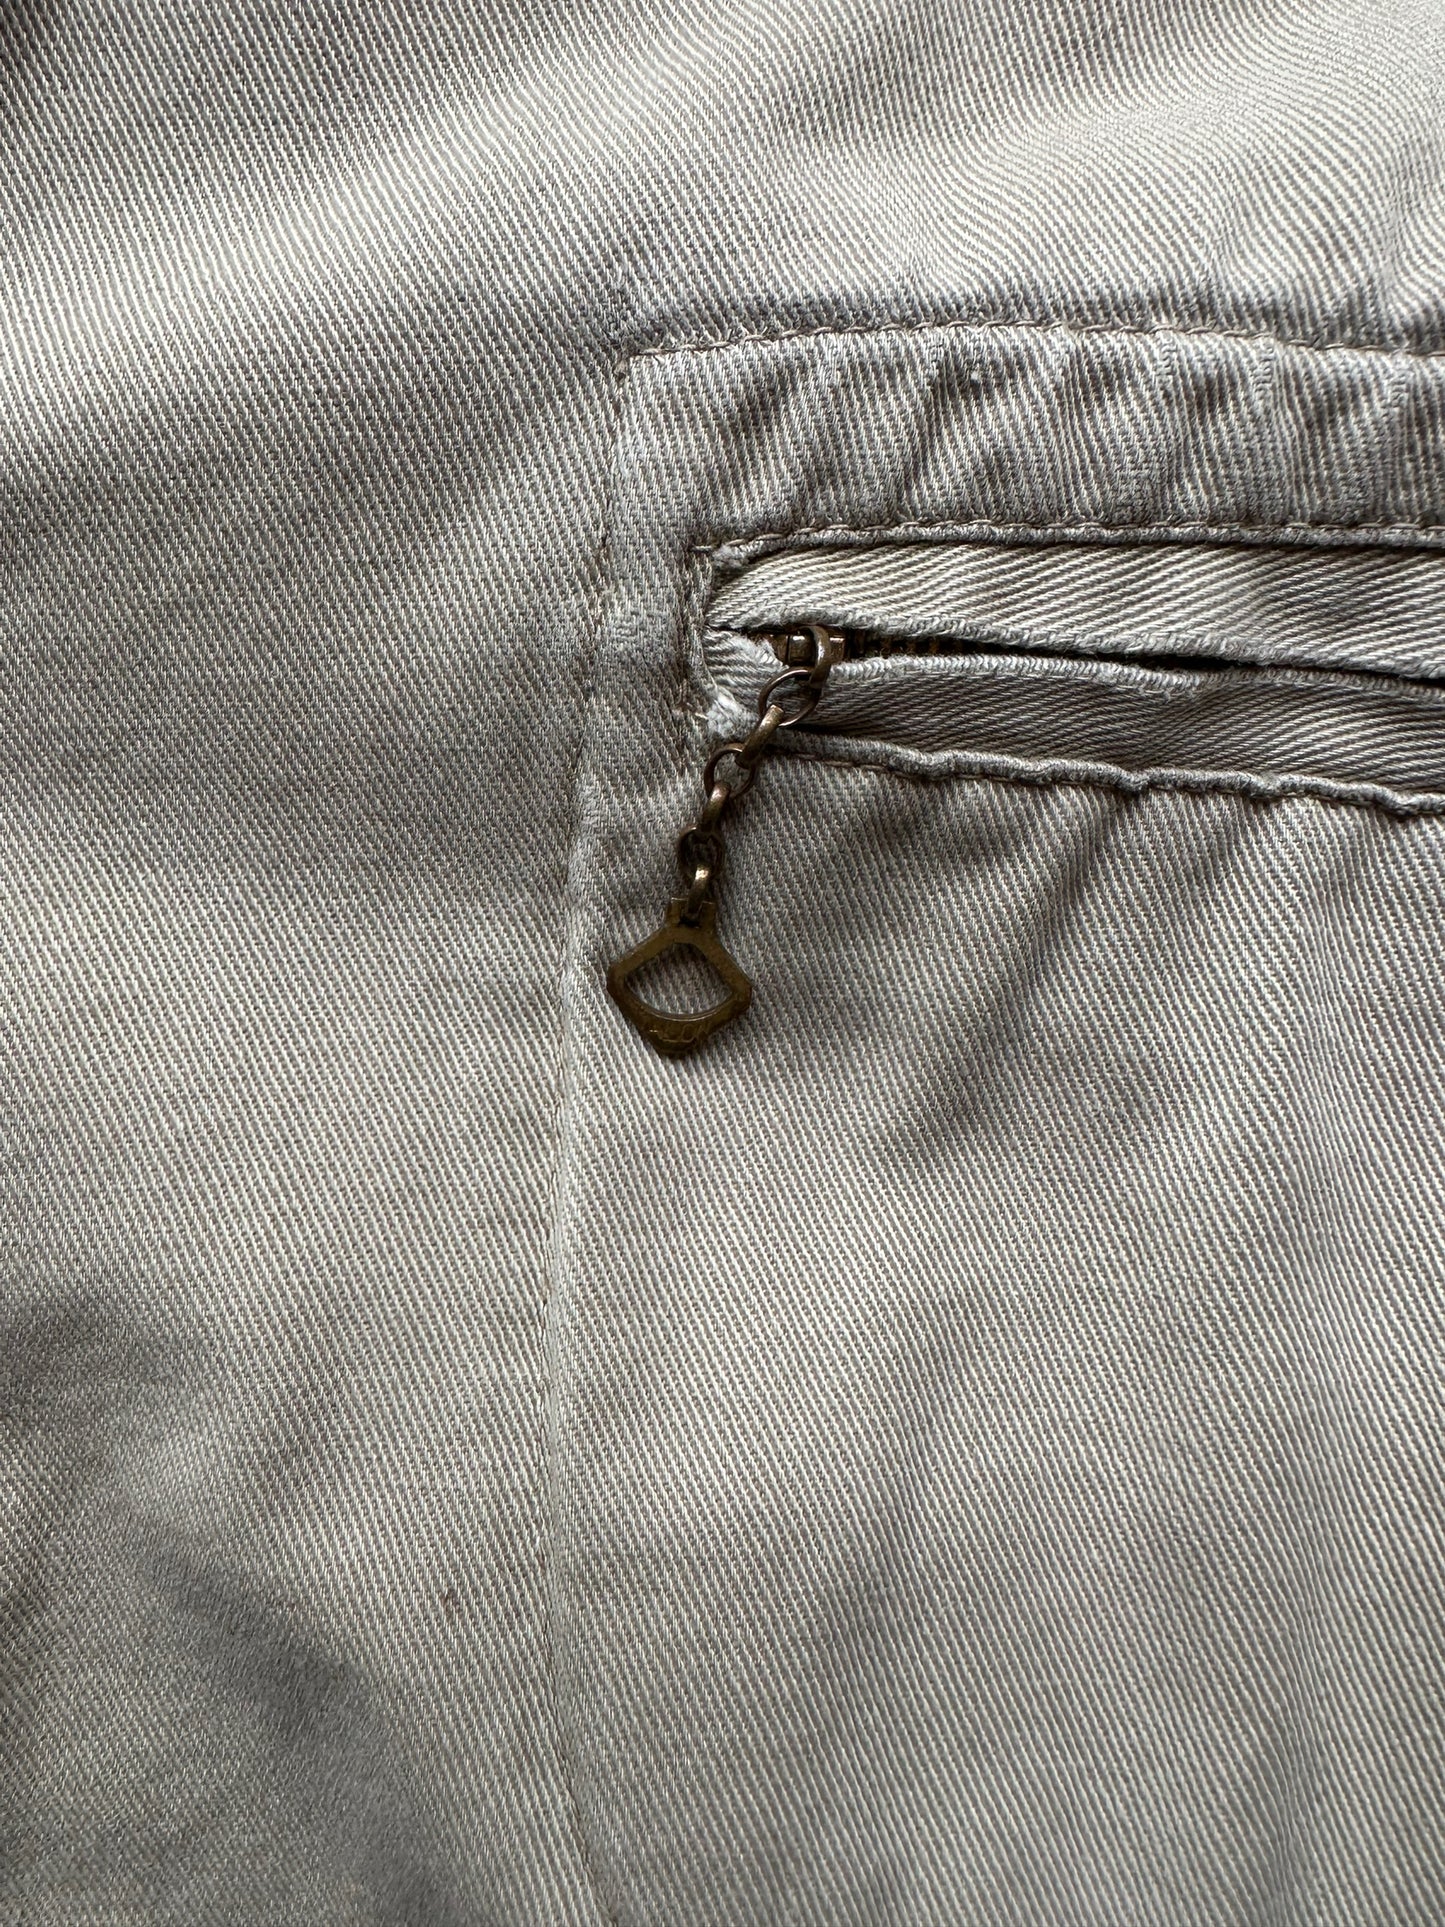 Talon Pocket Pull on Vintage Cropped Workwear Khaki Jacket SZ L | Vintage European Workwear Seattle | Barn Owl Vintage Goods Seattle